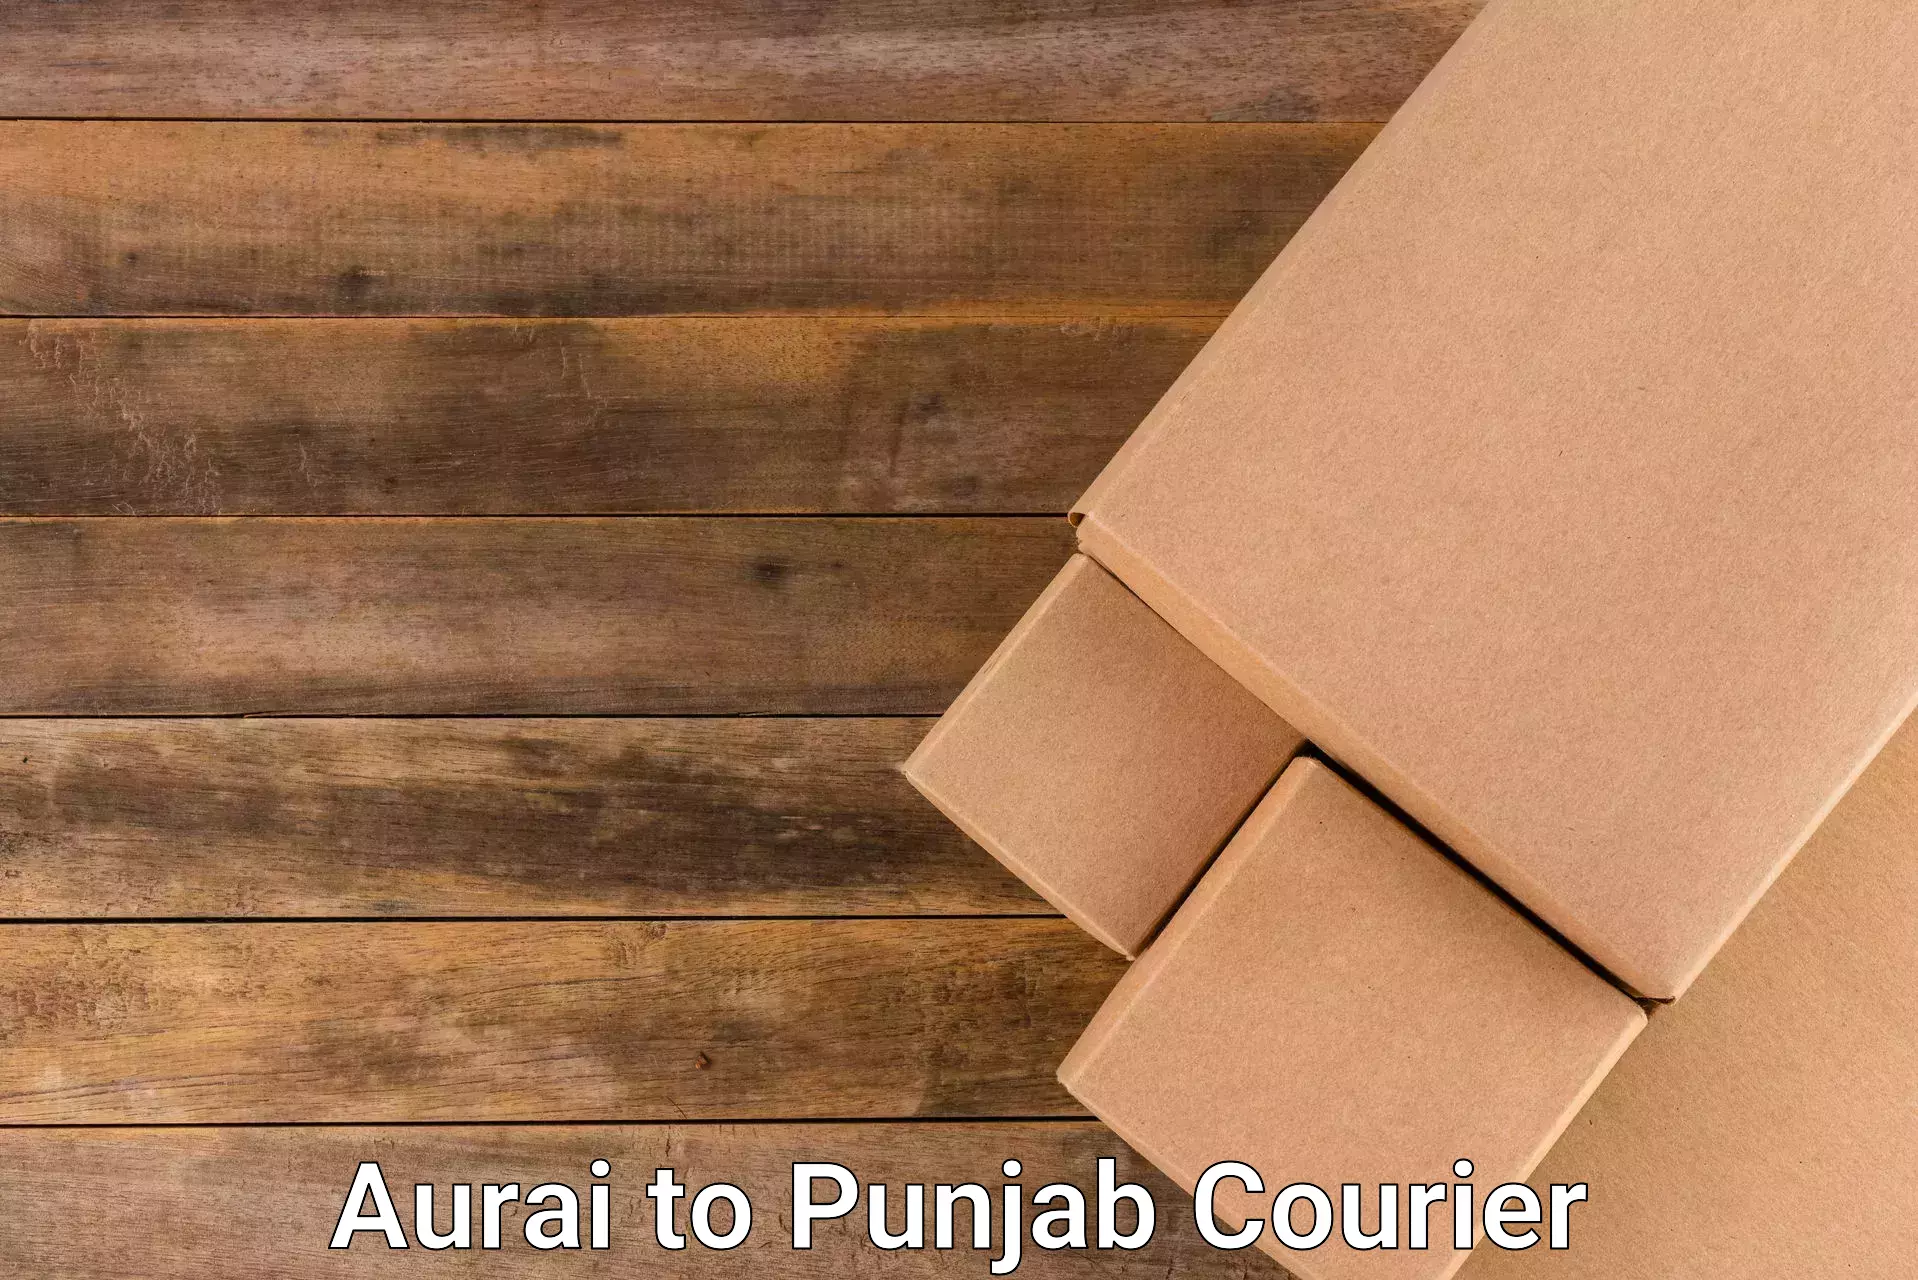 Modern courier technology Aurai to Central University of Punjab Bathinda